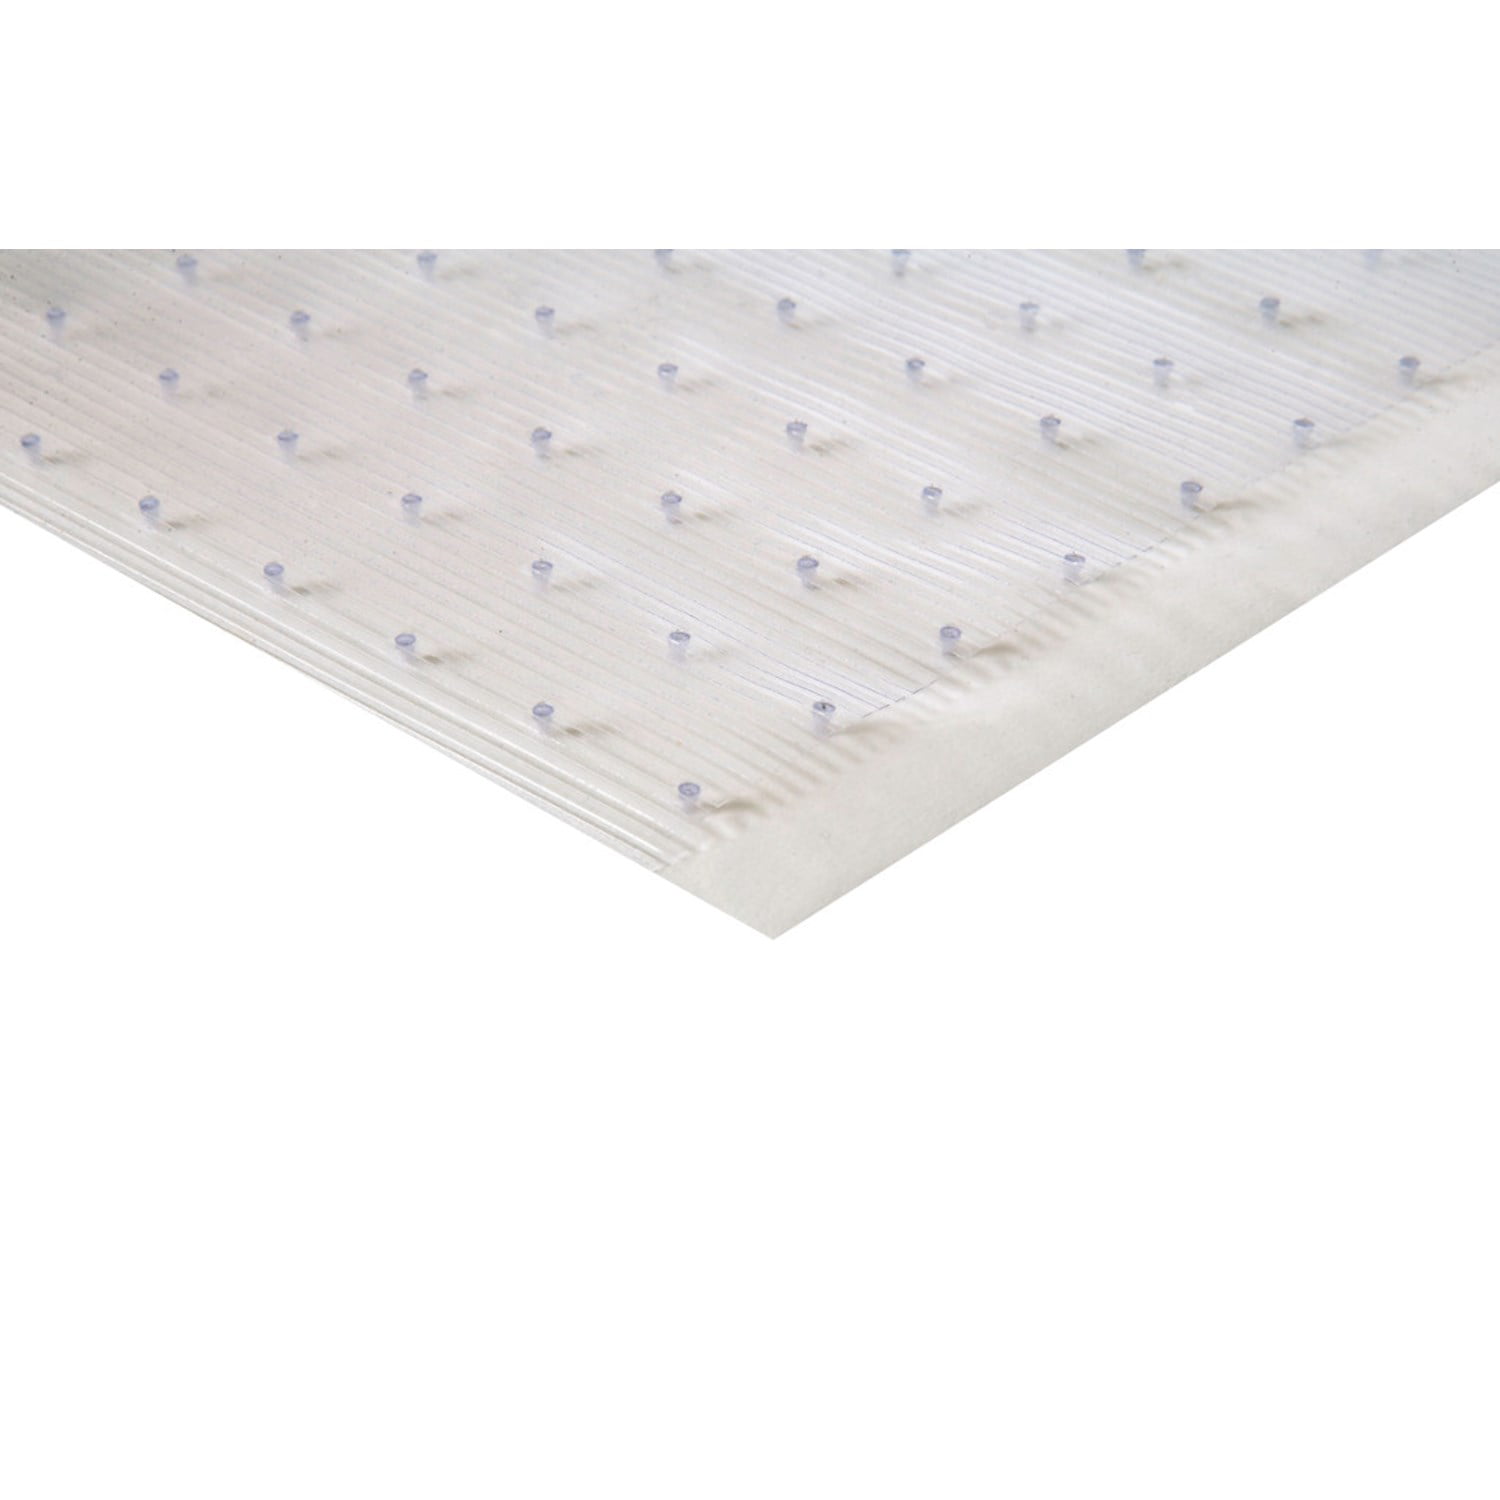 Clear Plastic Runner Rug Carpet Protector Mat Ribbed Multi Grip High 26x6 